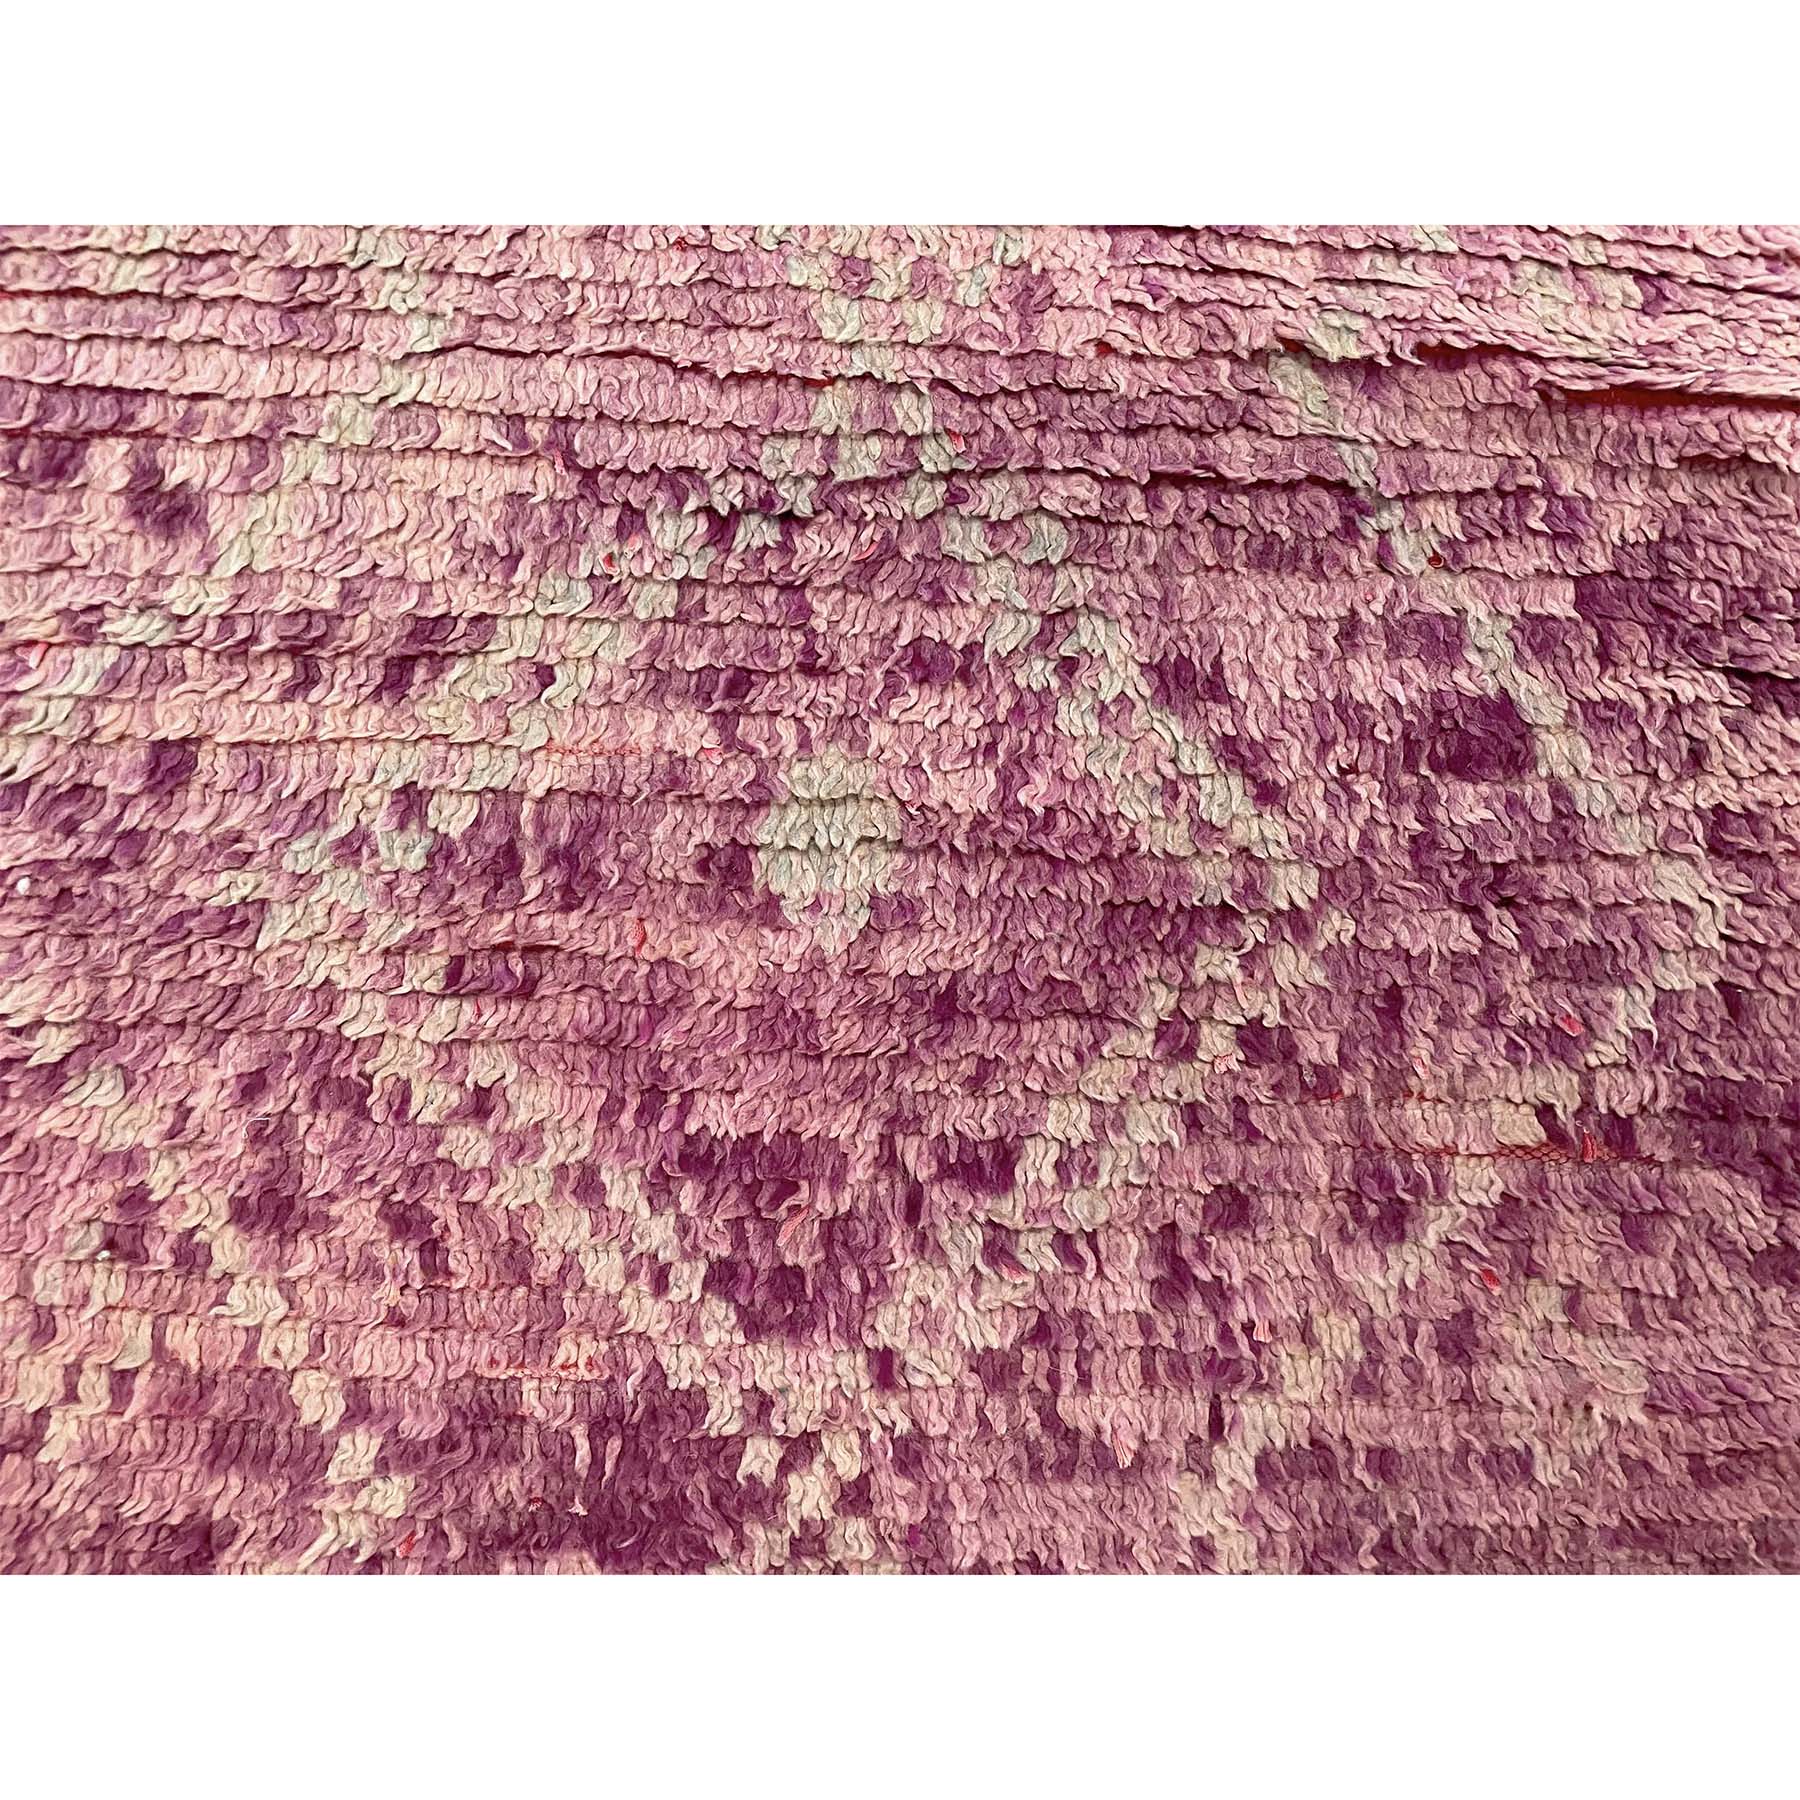 Faded purple Moroccan runner rug with diamond motifs - Kantara | Moroccan Rugs